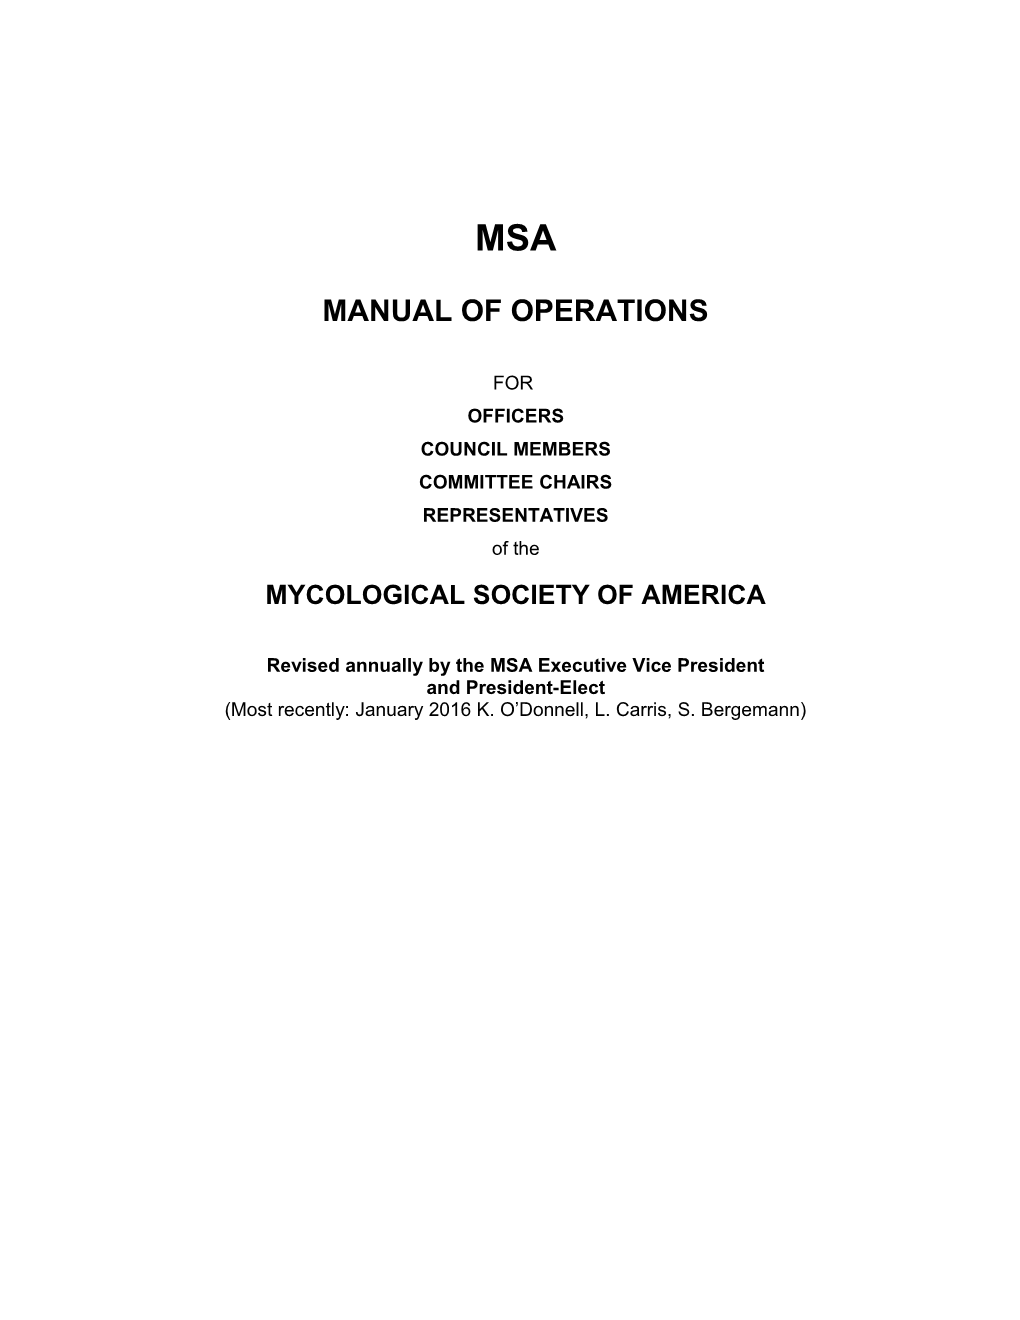 Mycological Society of America